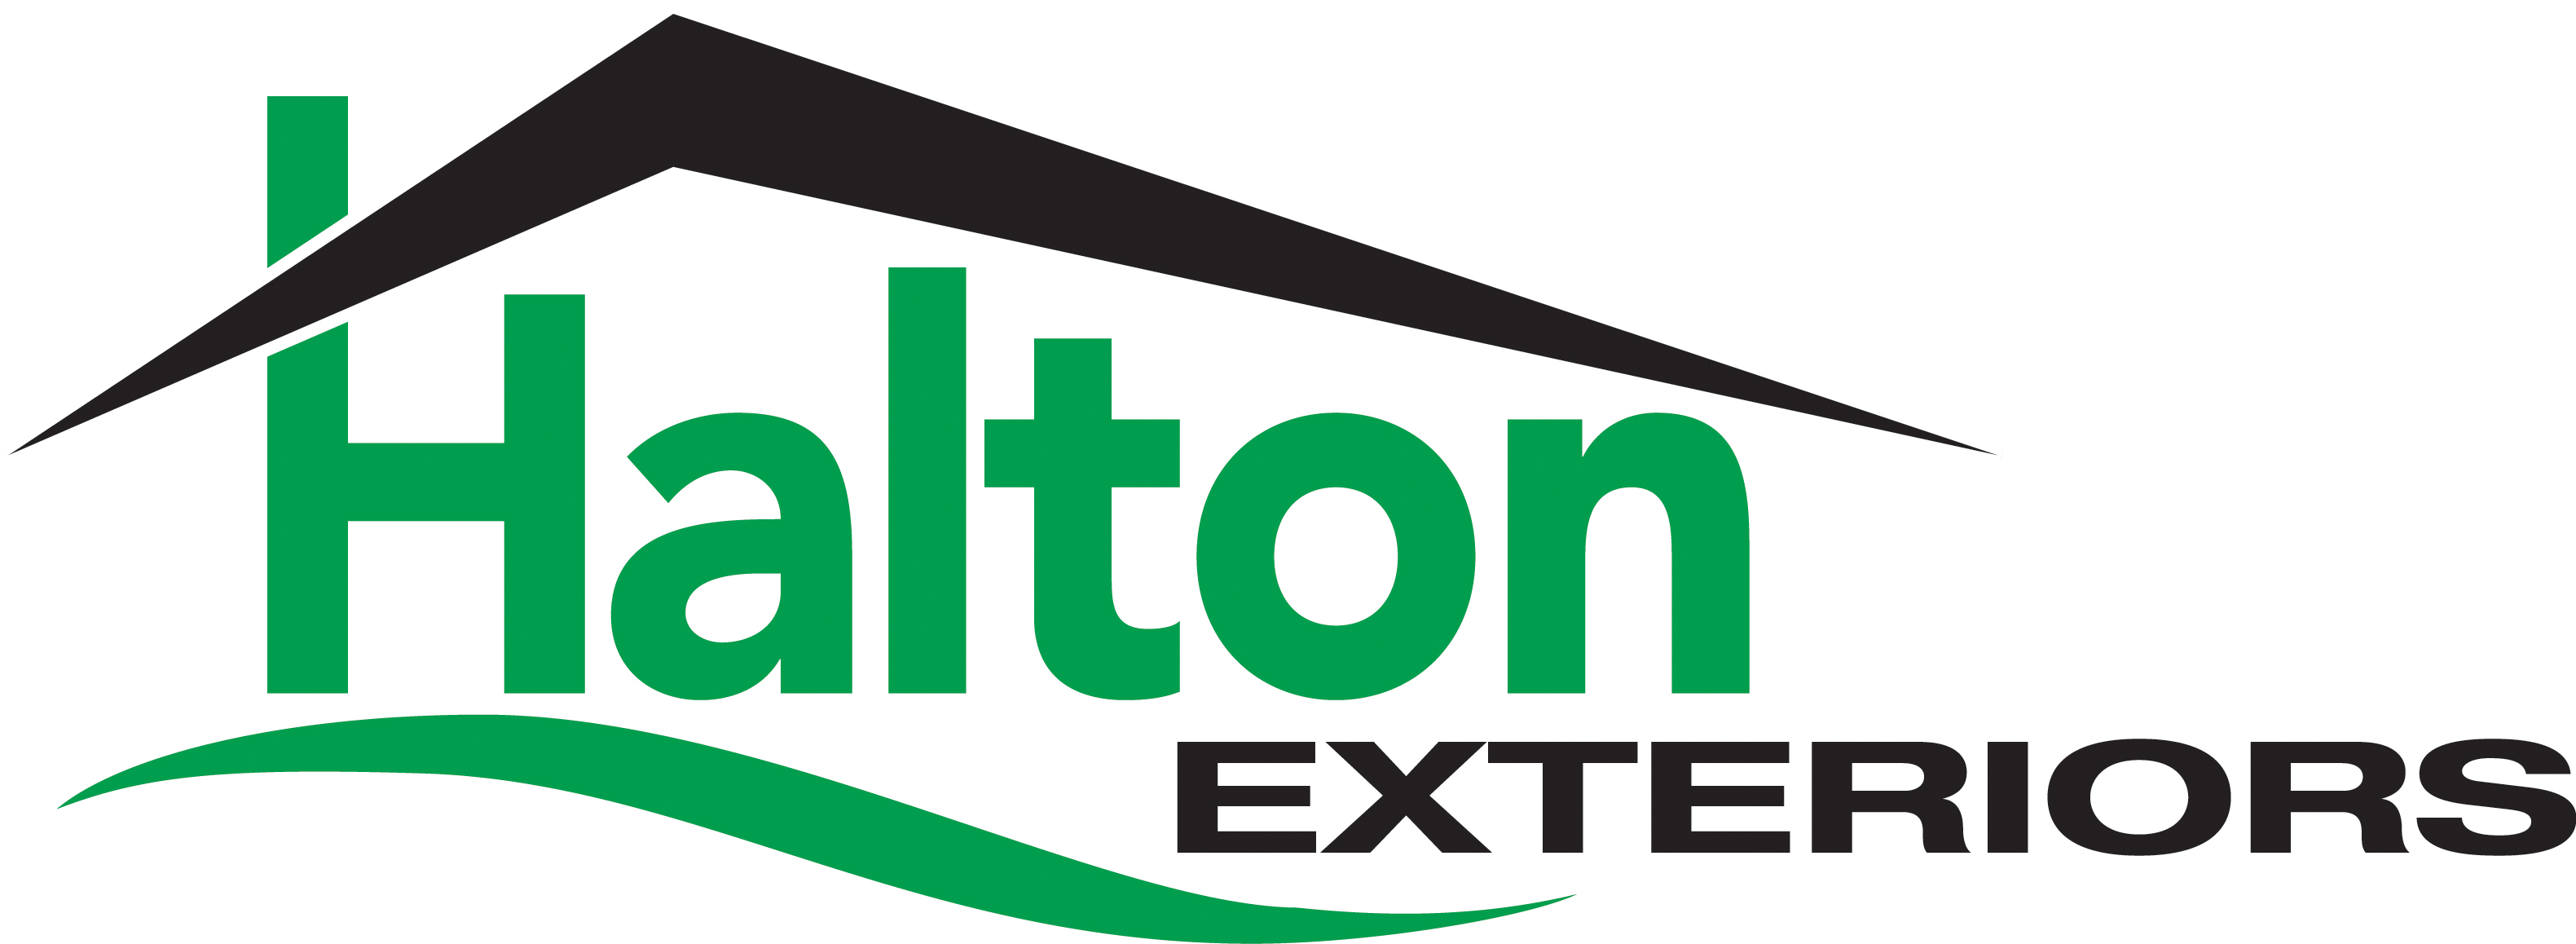 Halton Exteriors's logo